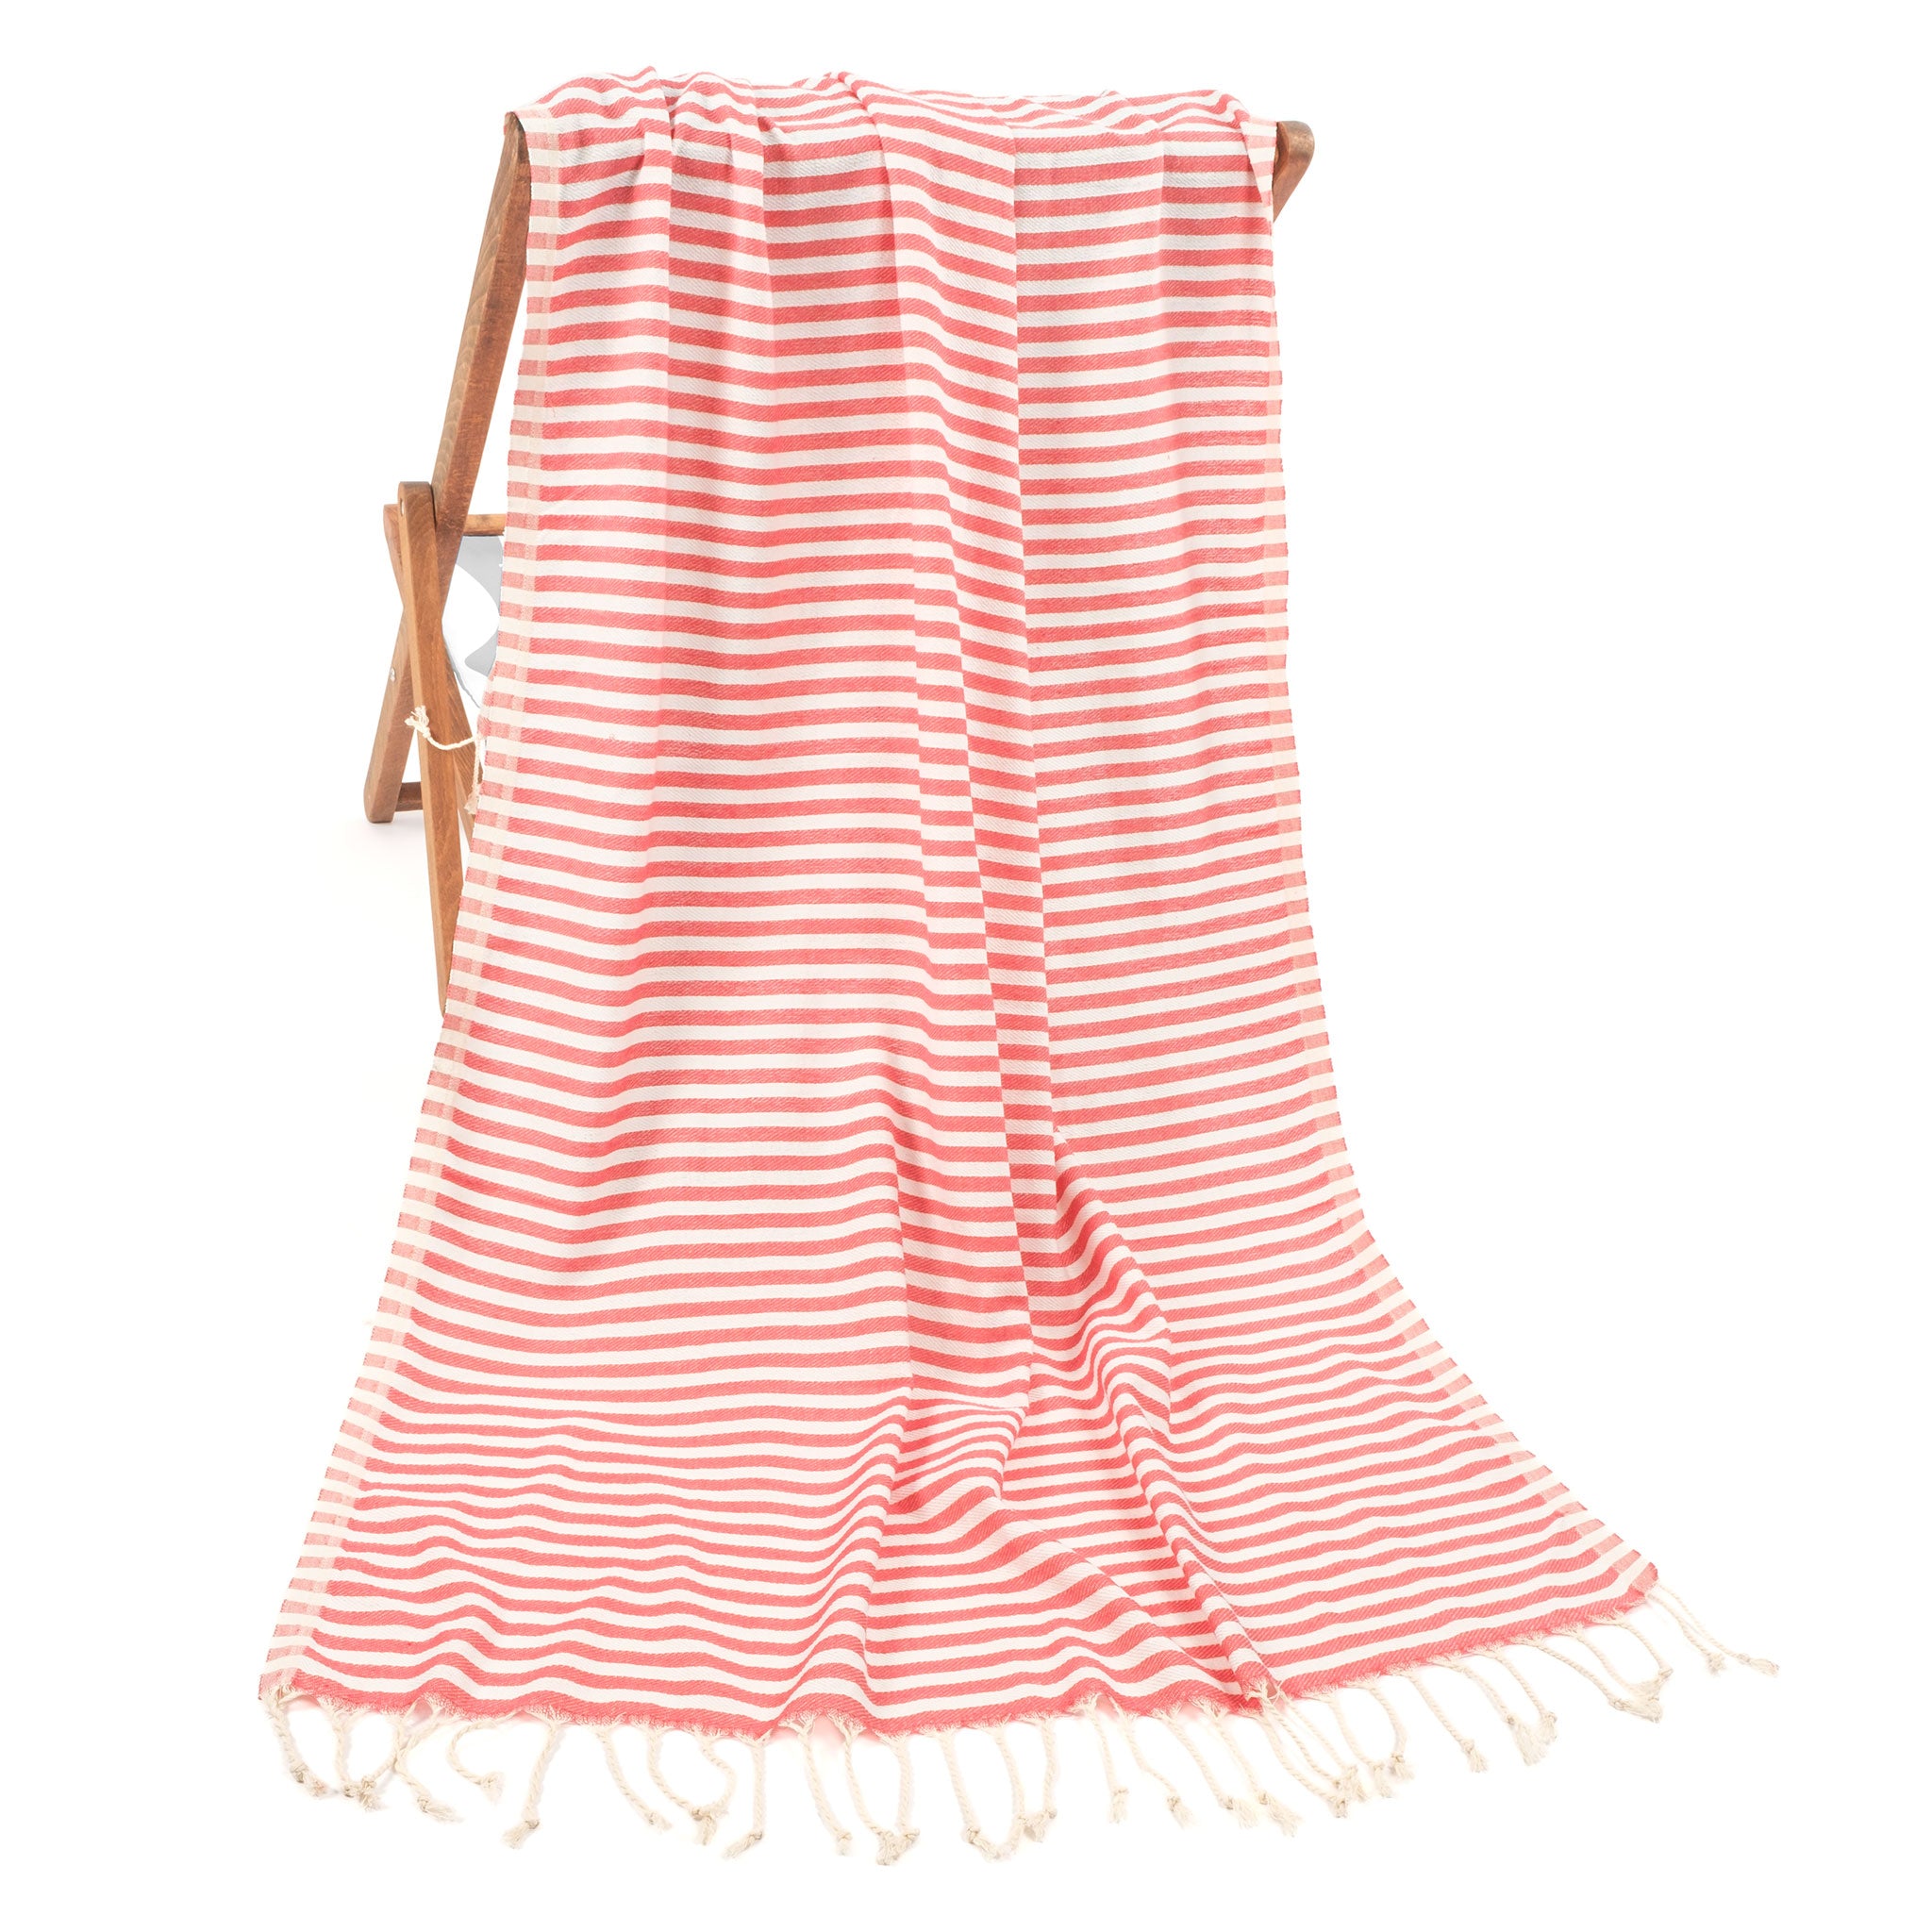 American Soft Linen - 100% Cotton Turkish Peshtemal Towels 40x70 Inches - Coral-Stripe - 1